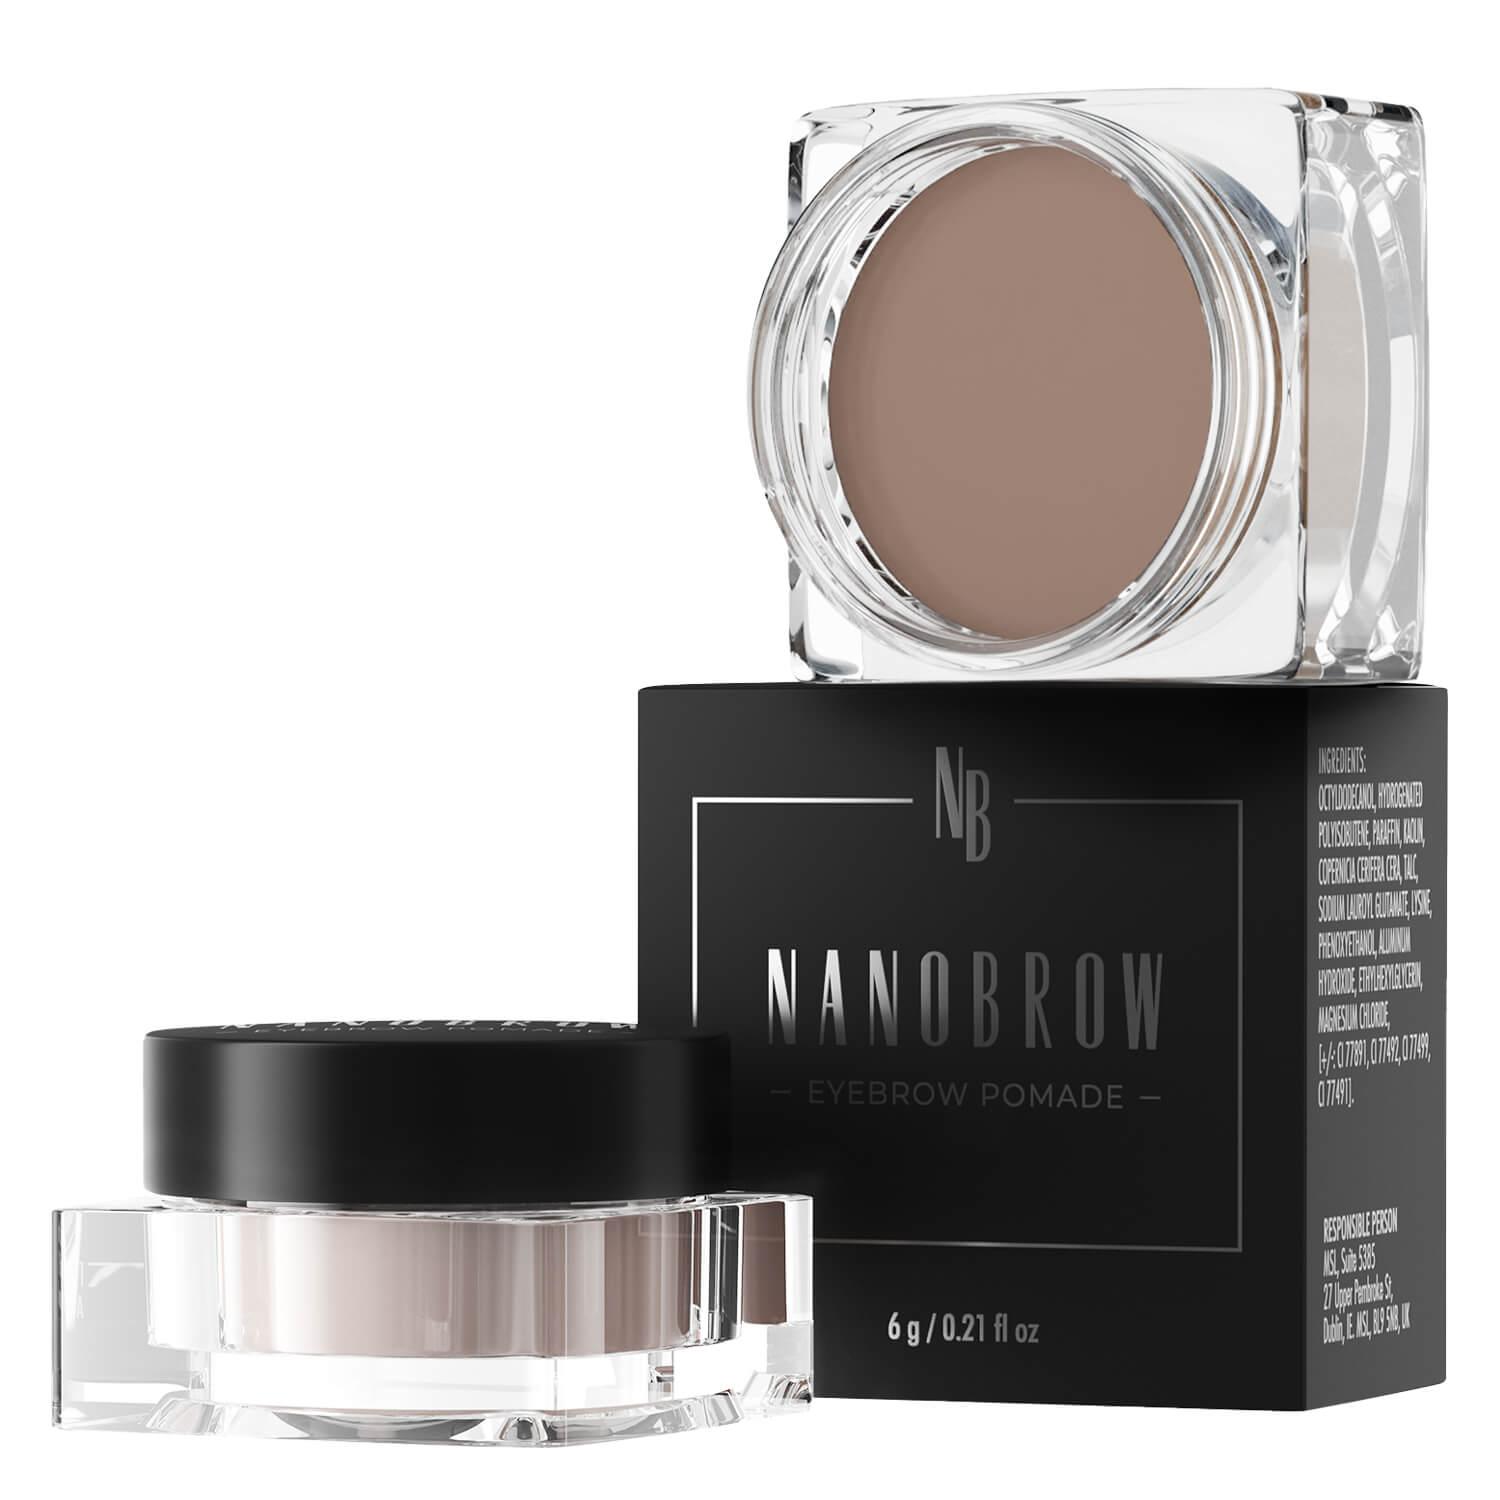 Nanobrow - Eyebrow Pomade Medium Brown